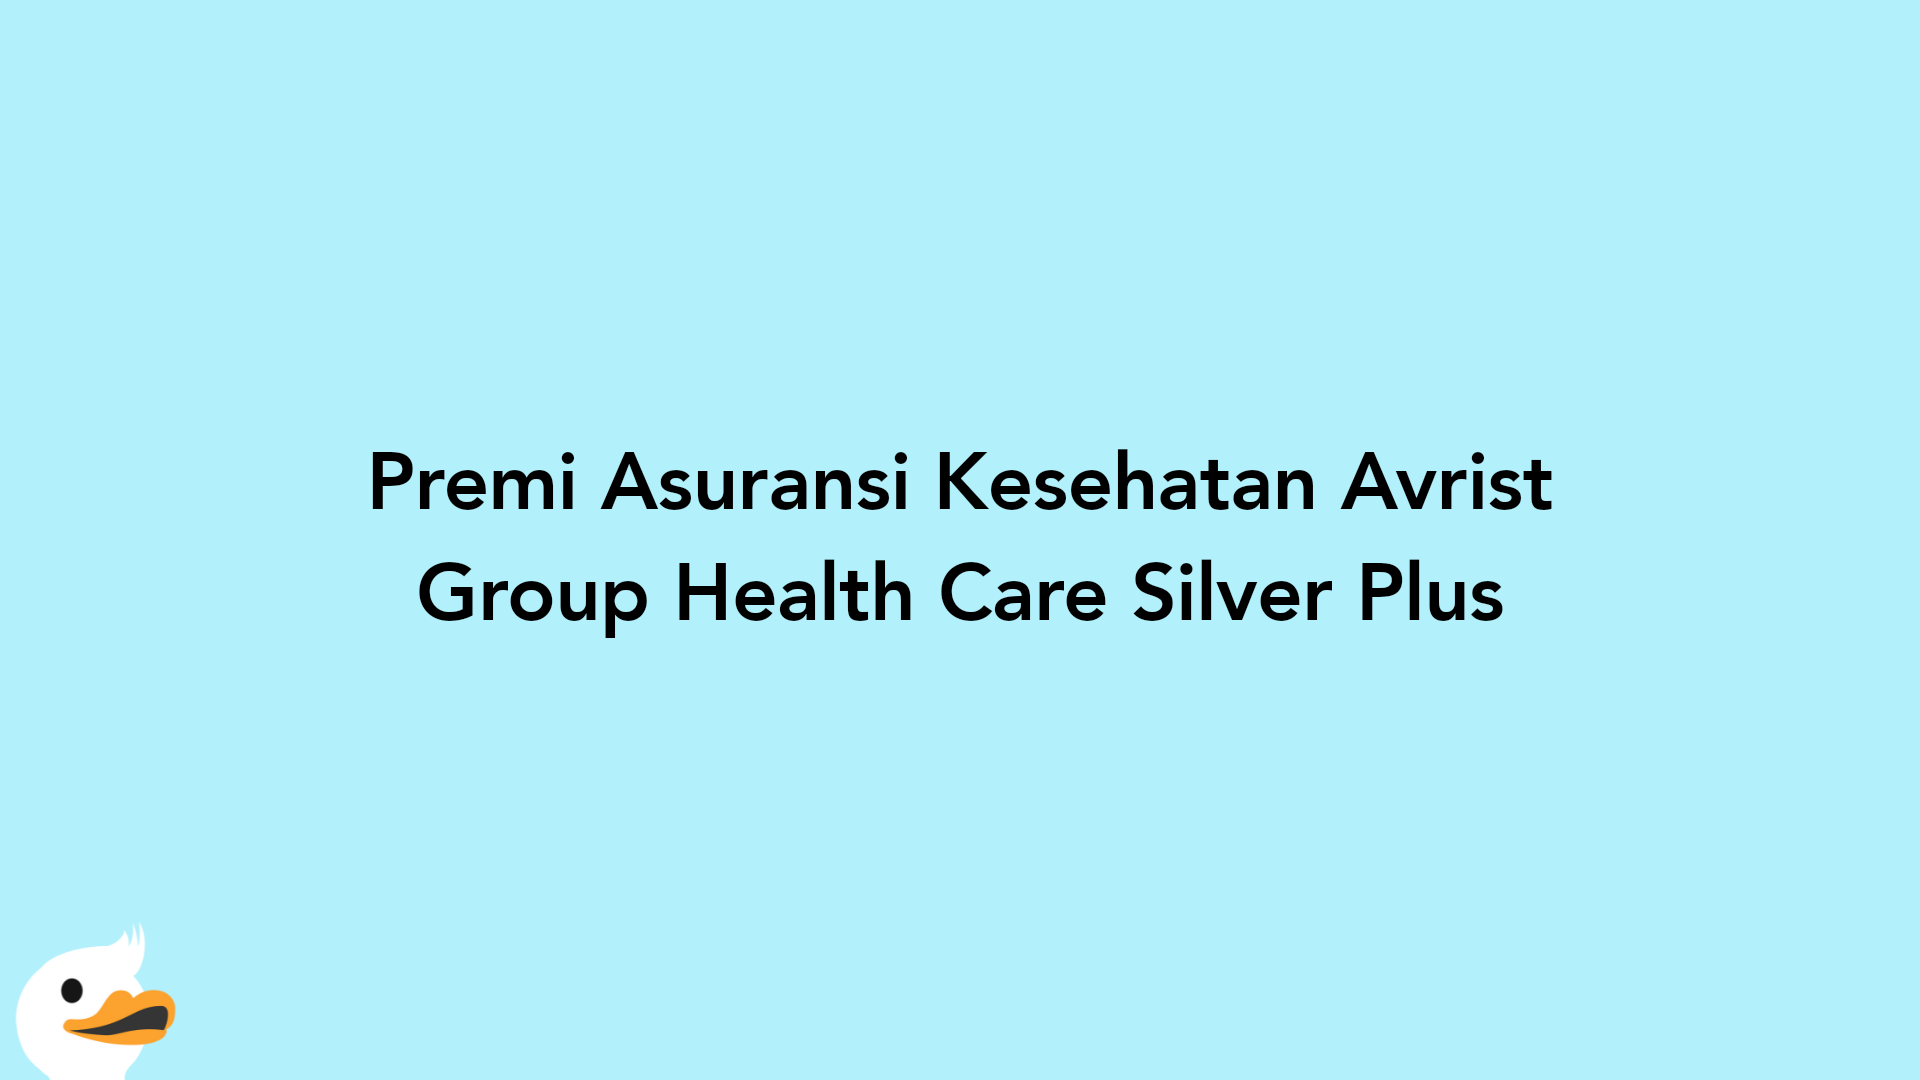 Premi Asuransi Kesehatan Avrist Group Health Care Silver Plus